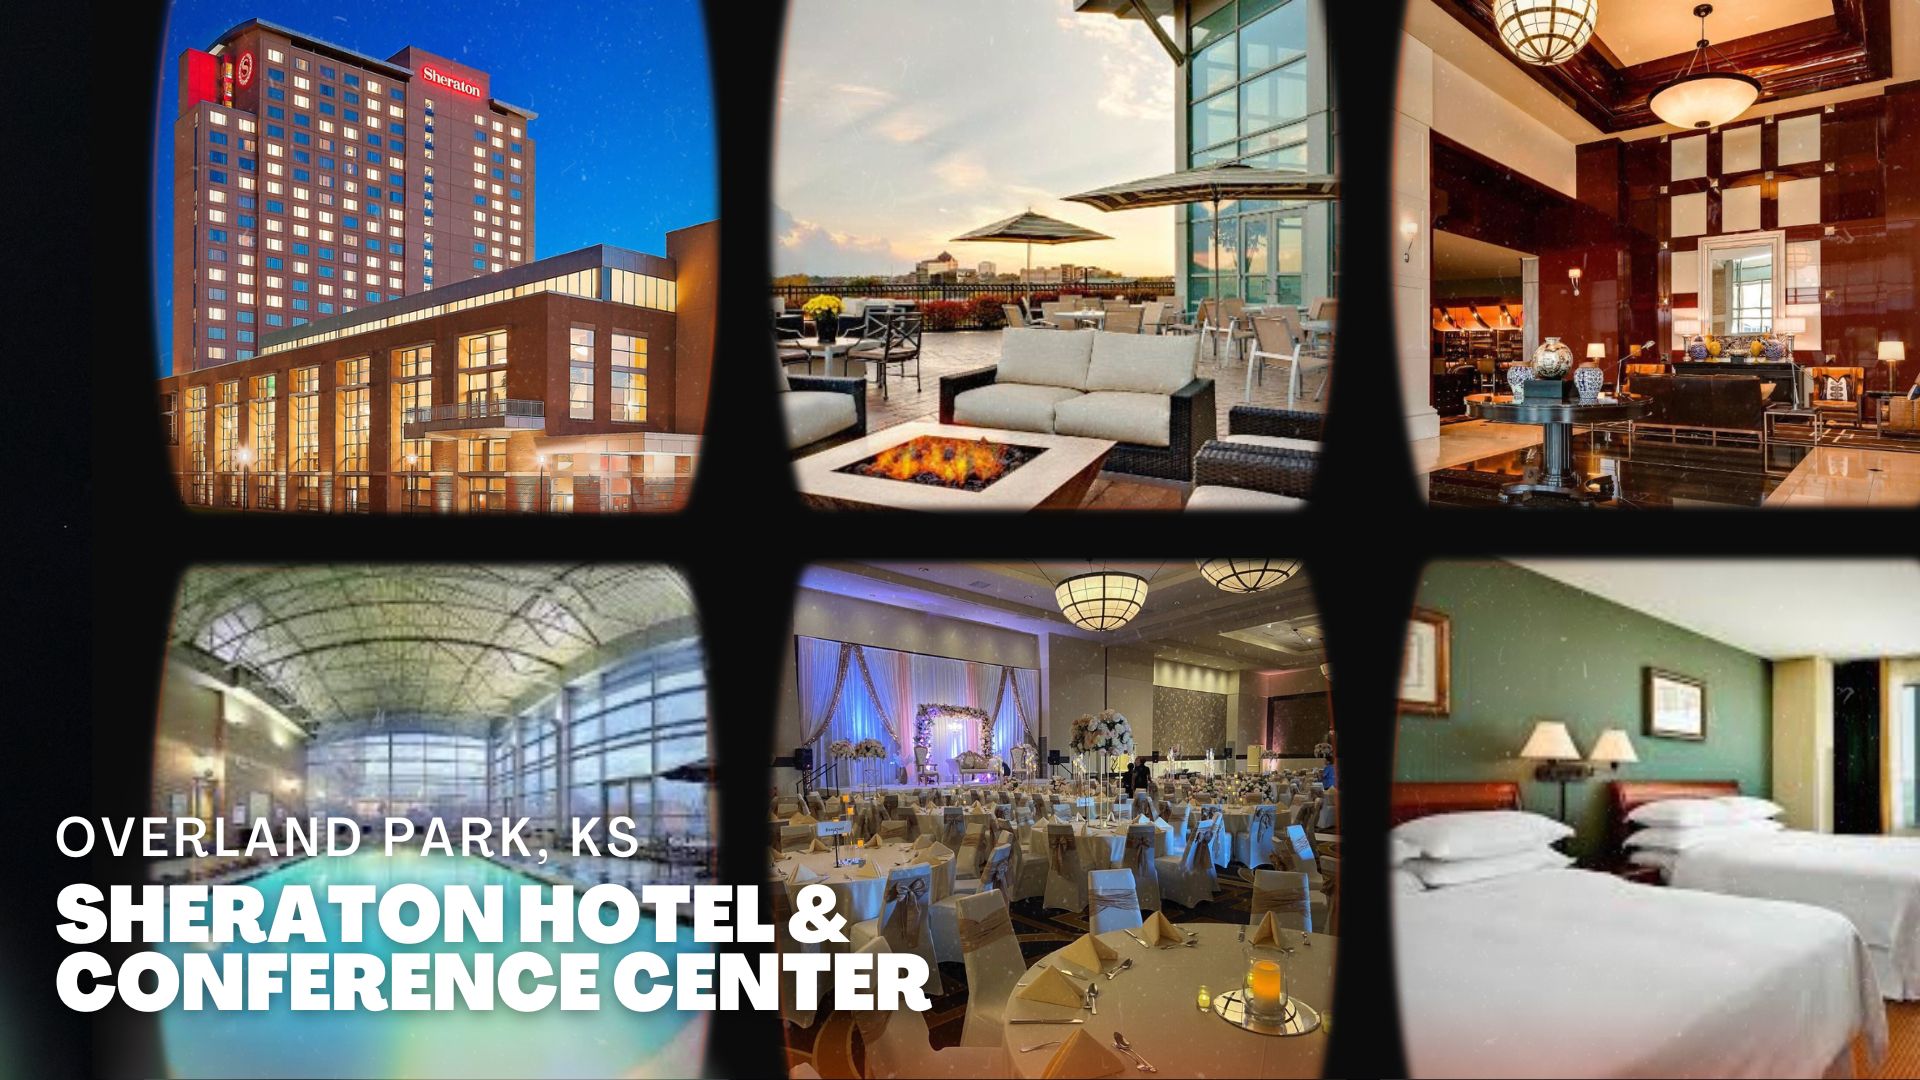 Sheraton Hotel & Conference Center - Overland Park, KS